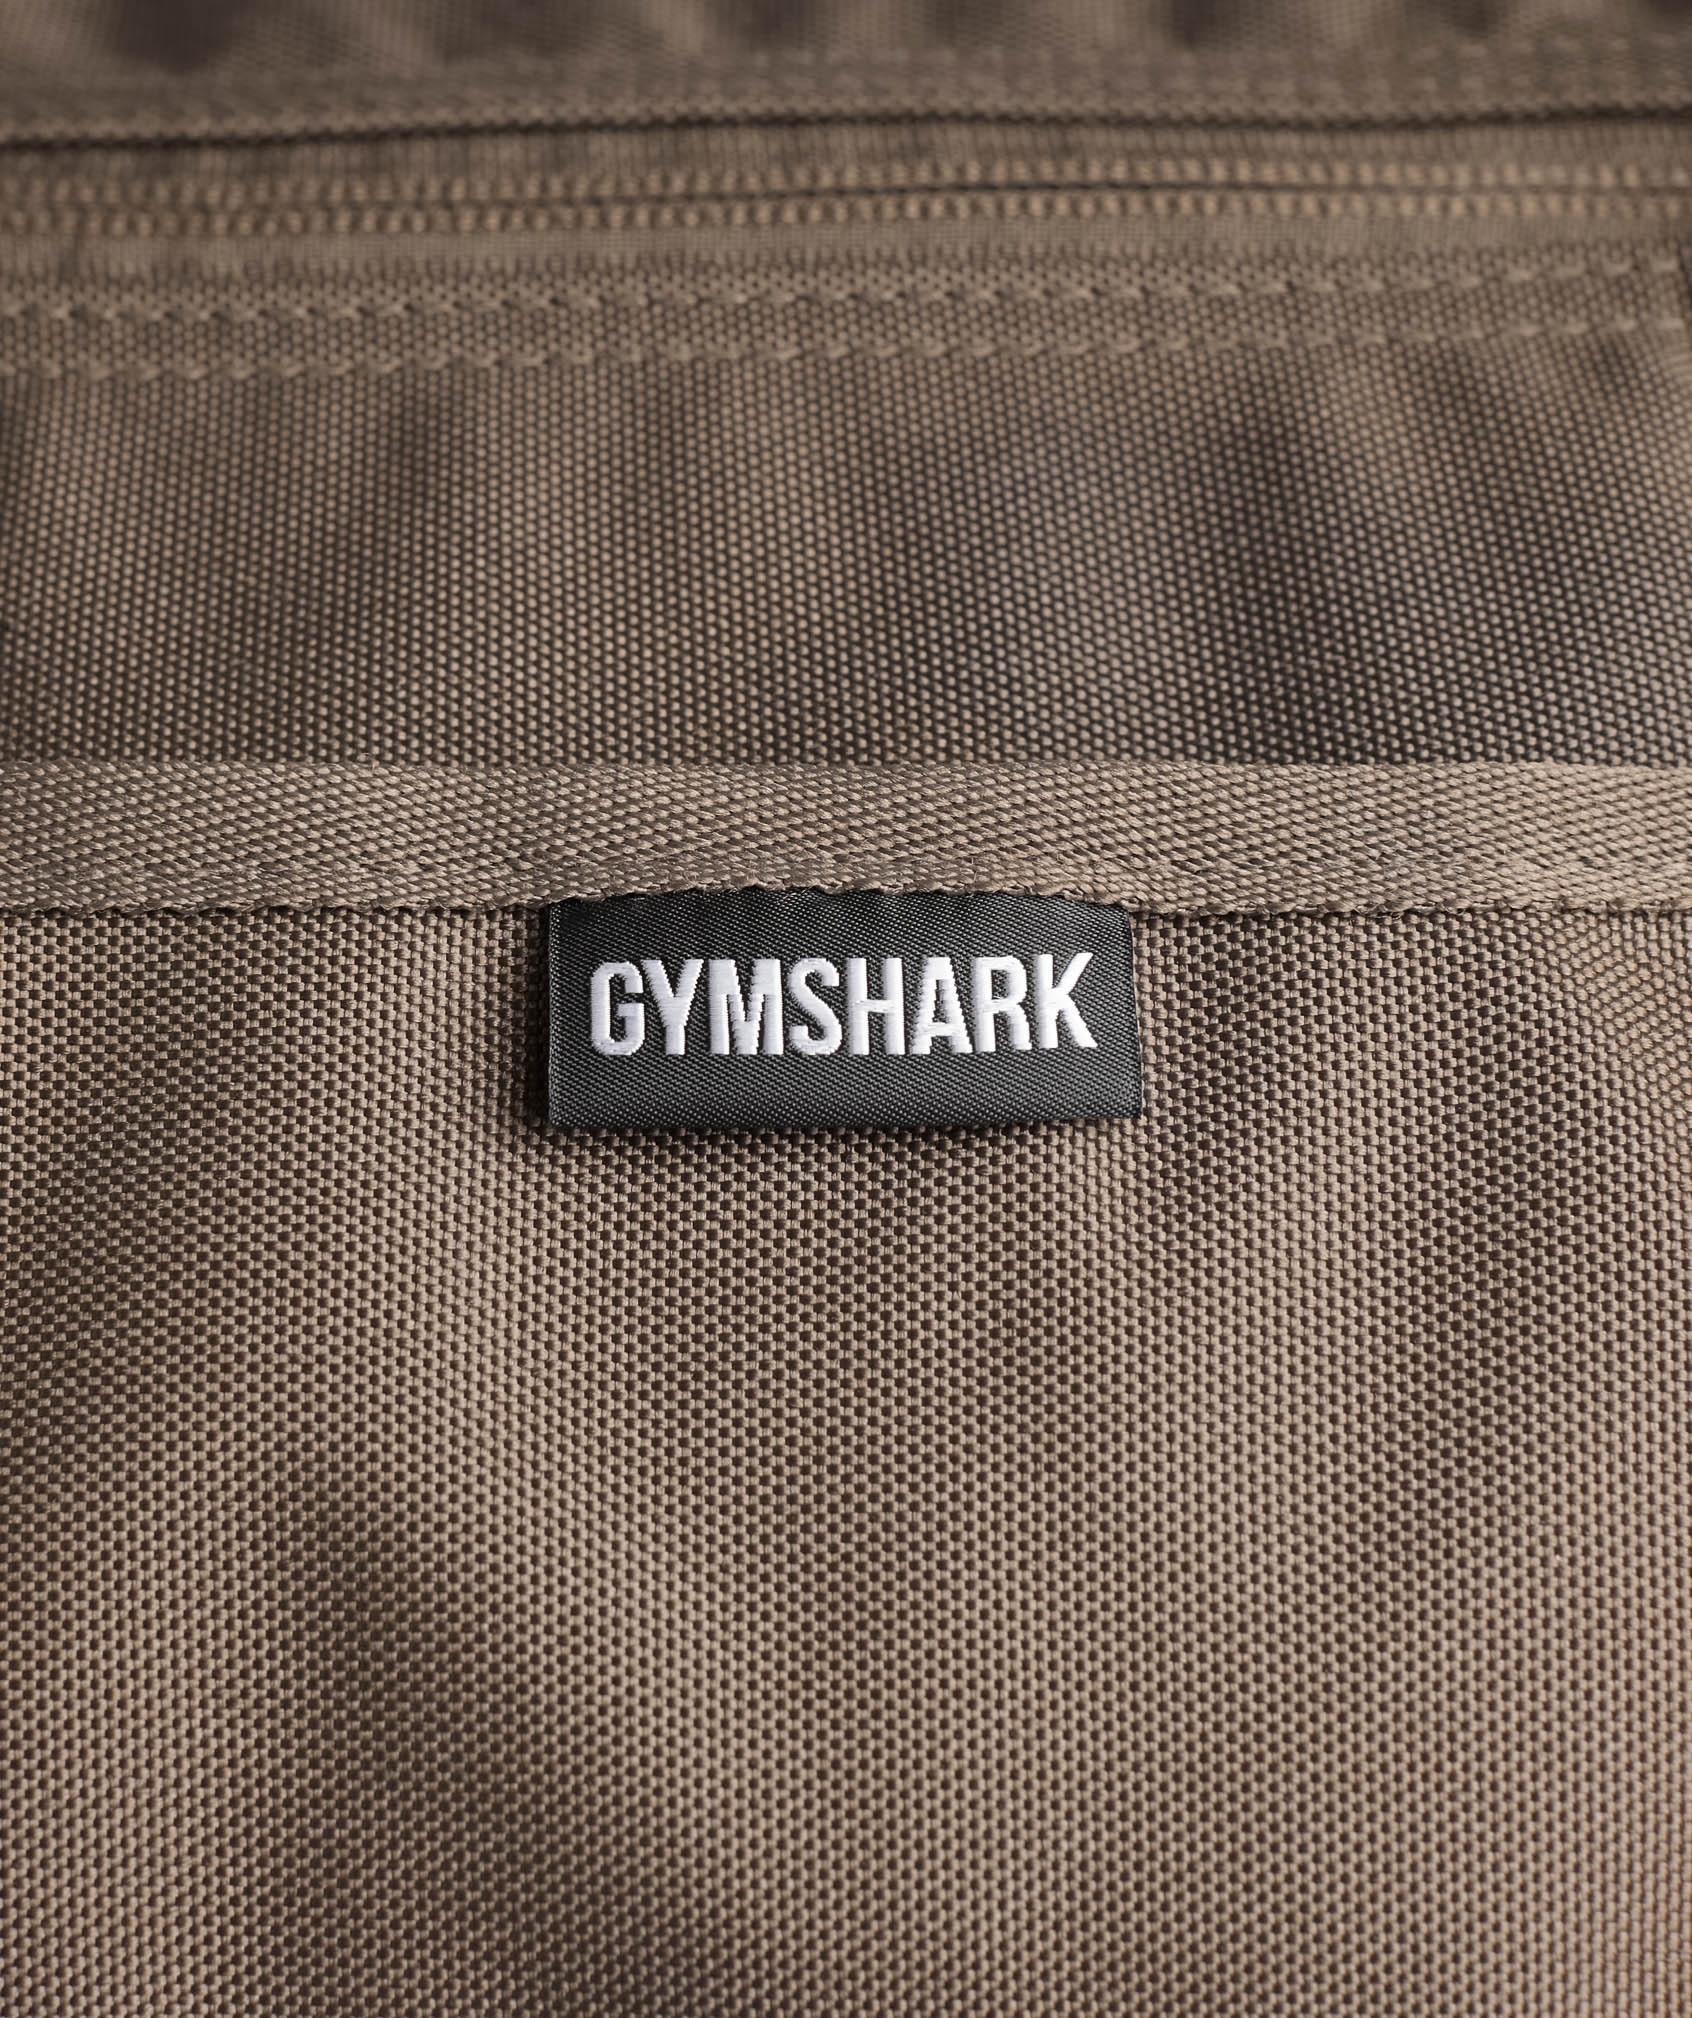 Sharkhead Gym Bag in Camo Brown - view 3